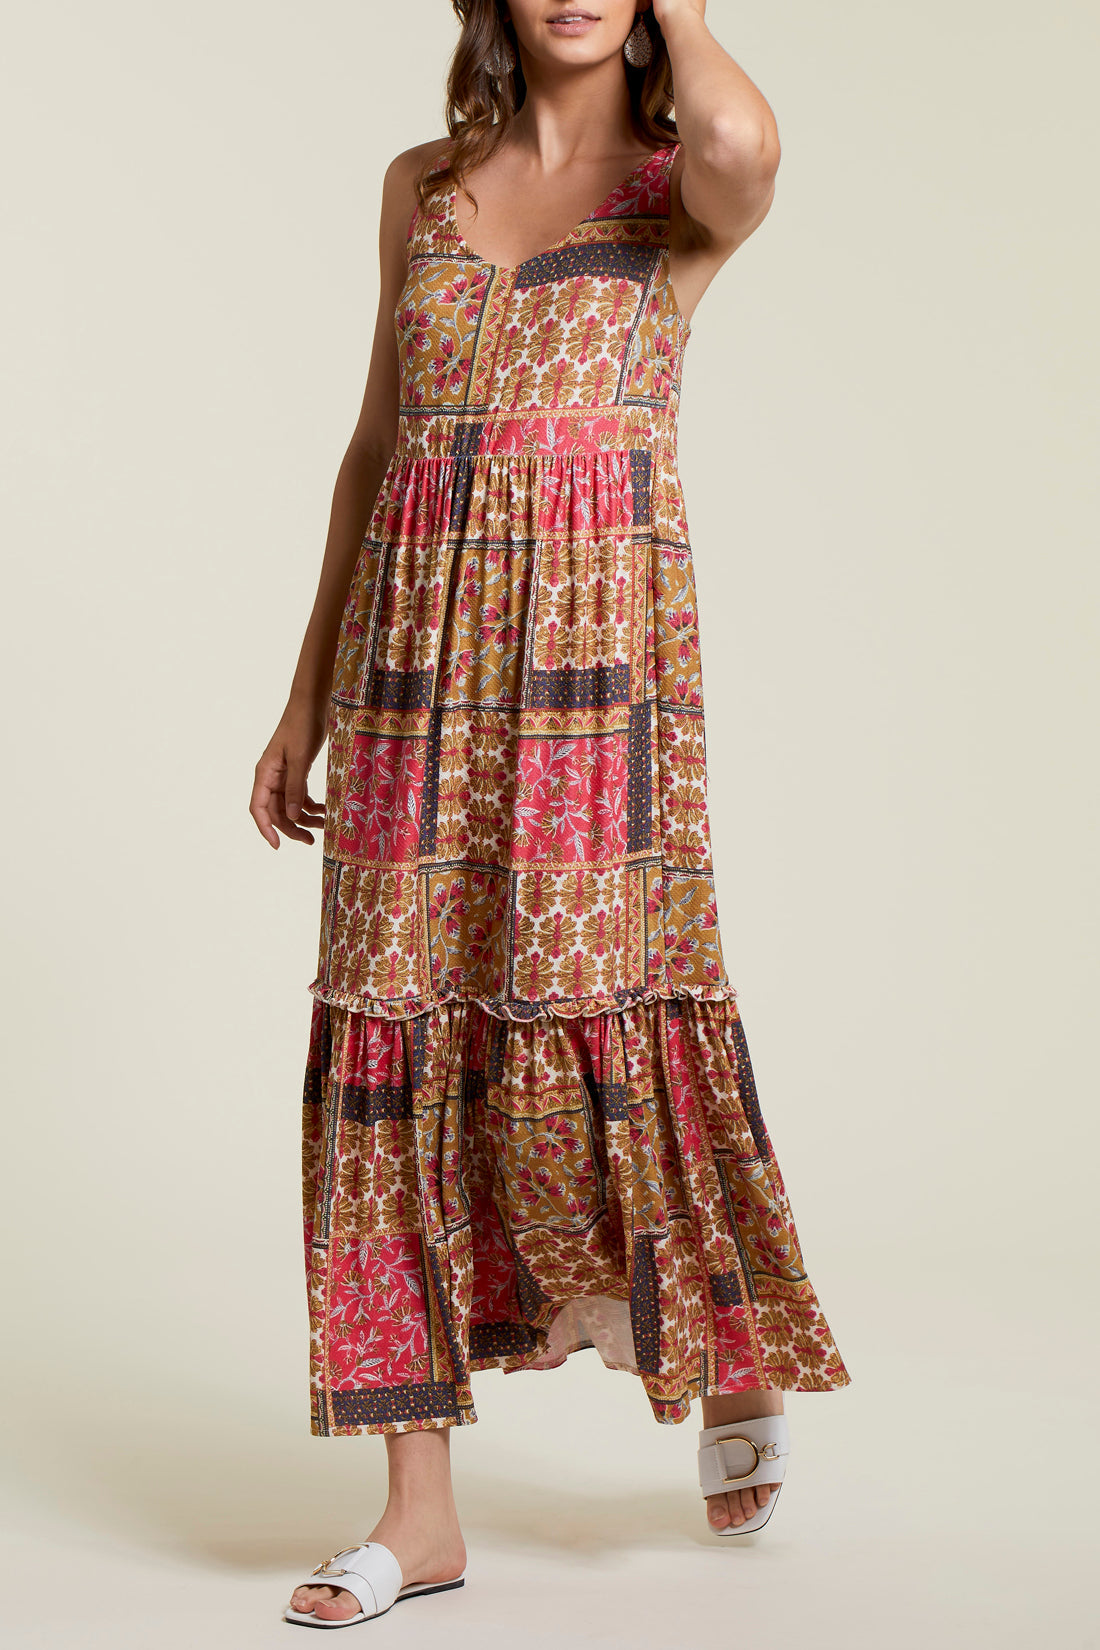 Tribal Paige Dress - Yellovango Clothing - Dresses + Jumpsuits - Dresses - Long Dresses by Tribal | Grace the Boutique